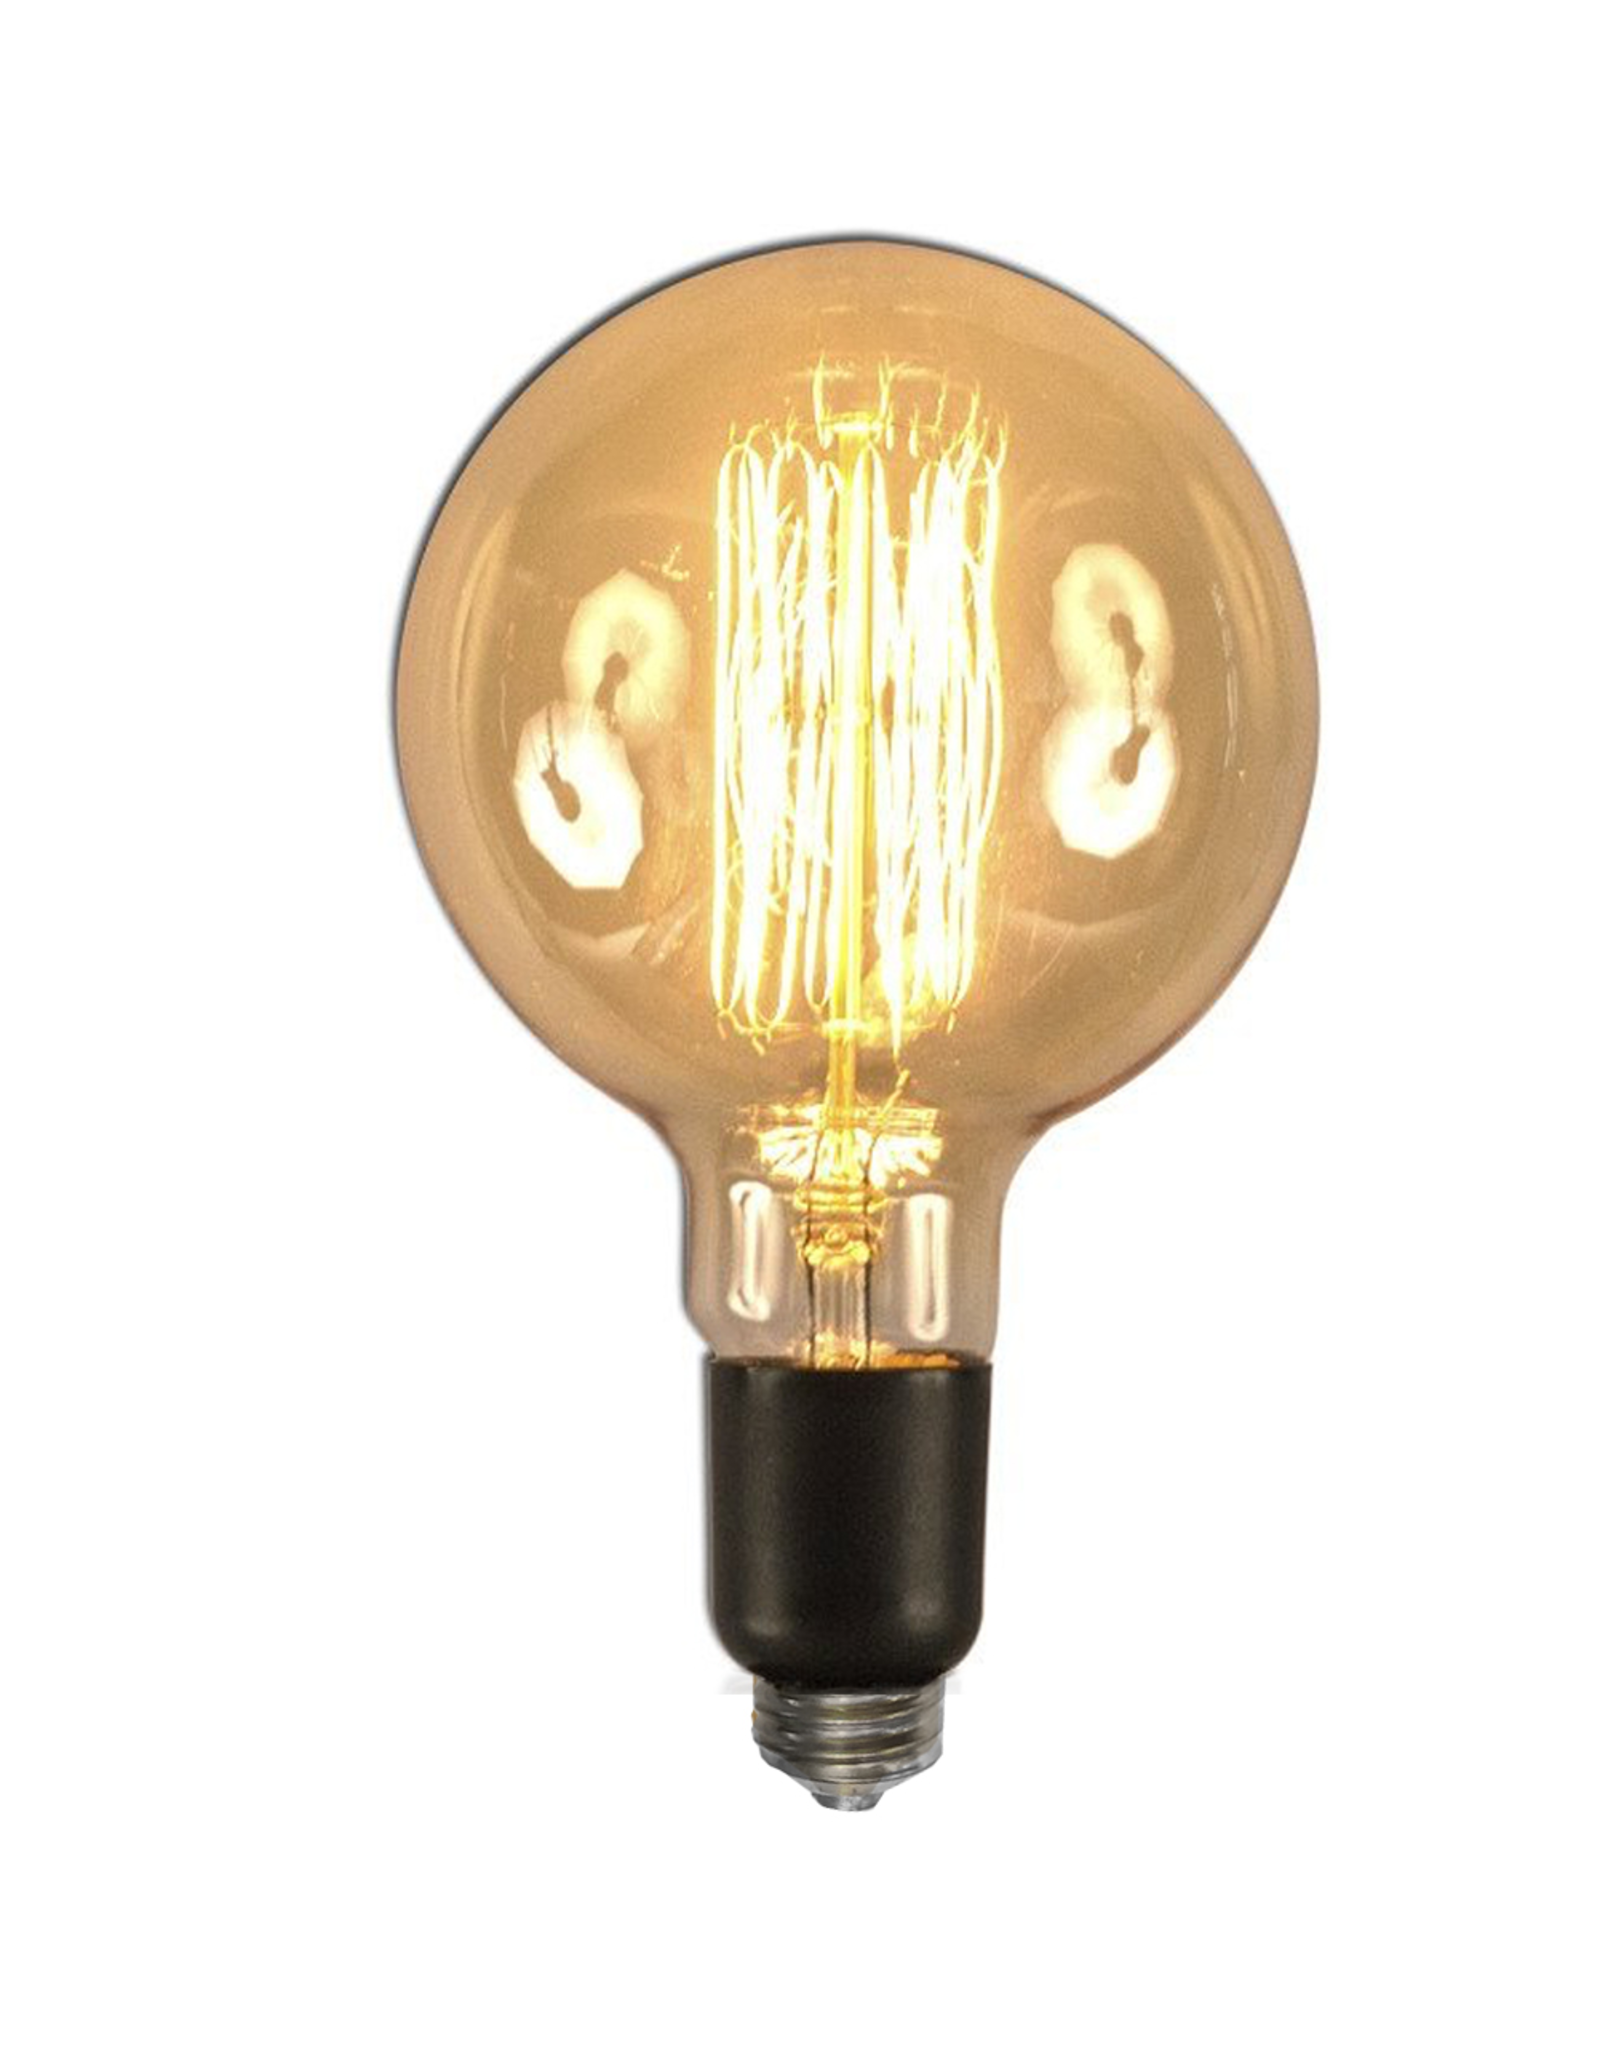 Oversize Vintage Style Light Bulb 60W E26 G150F2 6X11in